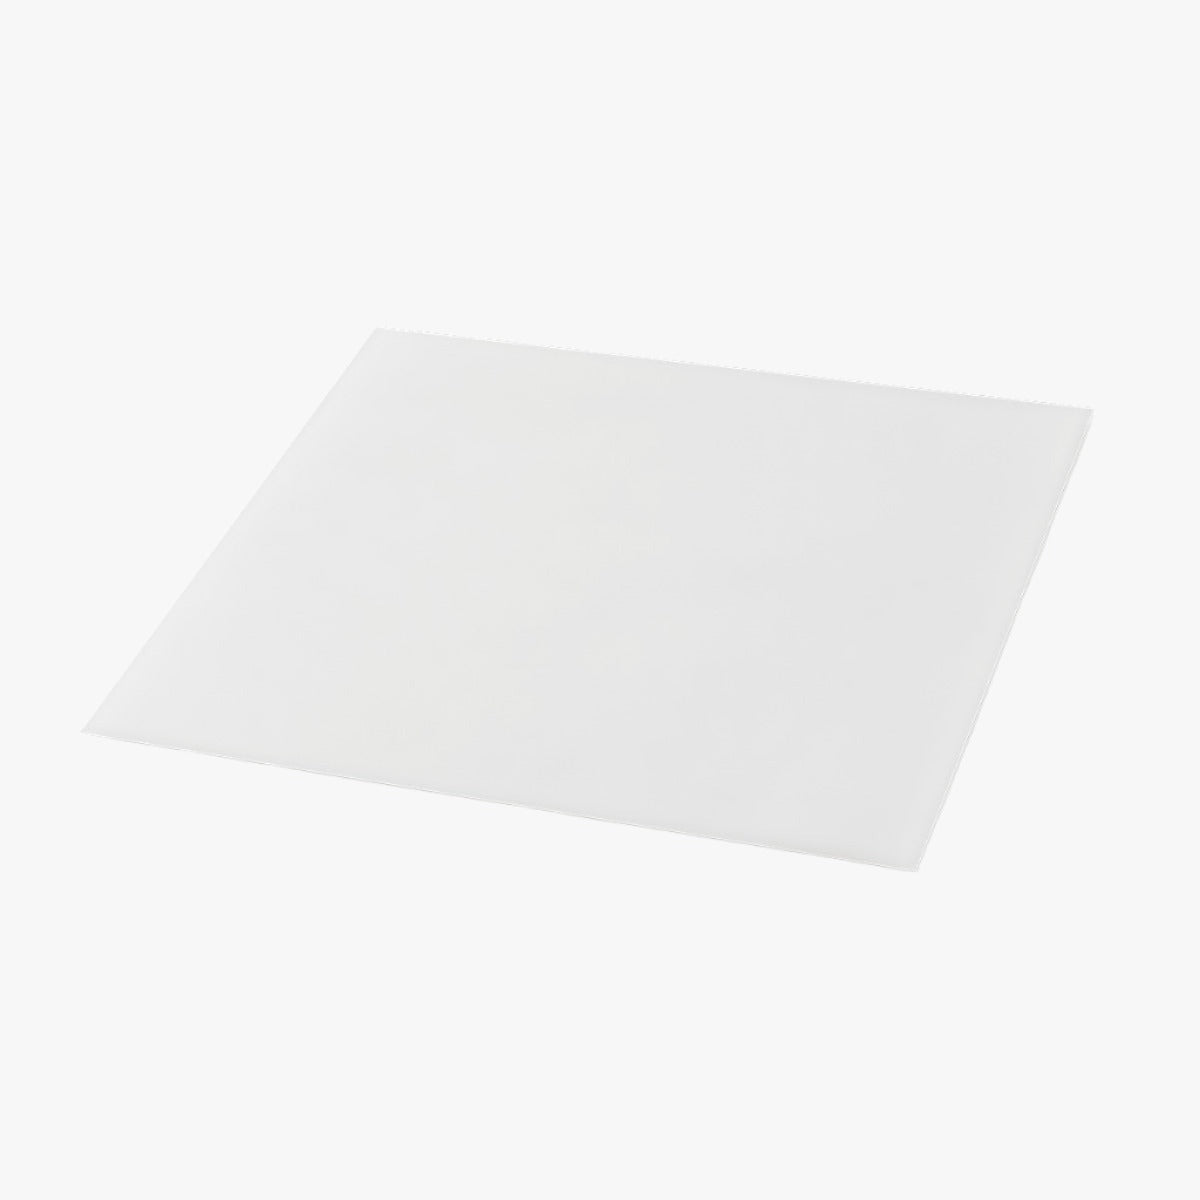 Steroplast Steropad Compresses Sterile 10 x 10 cm